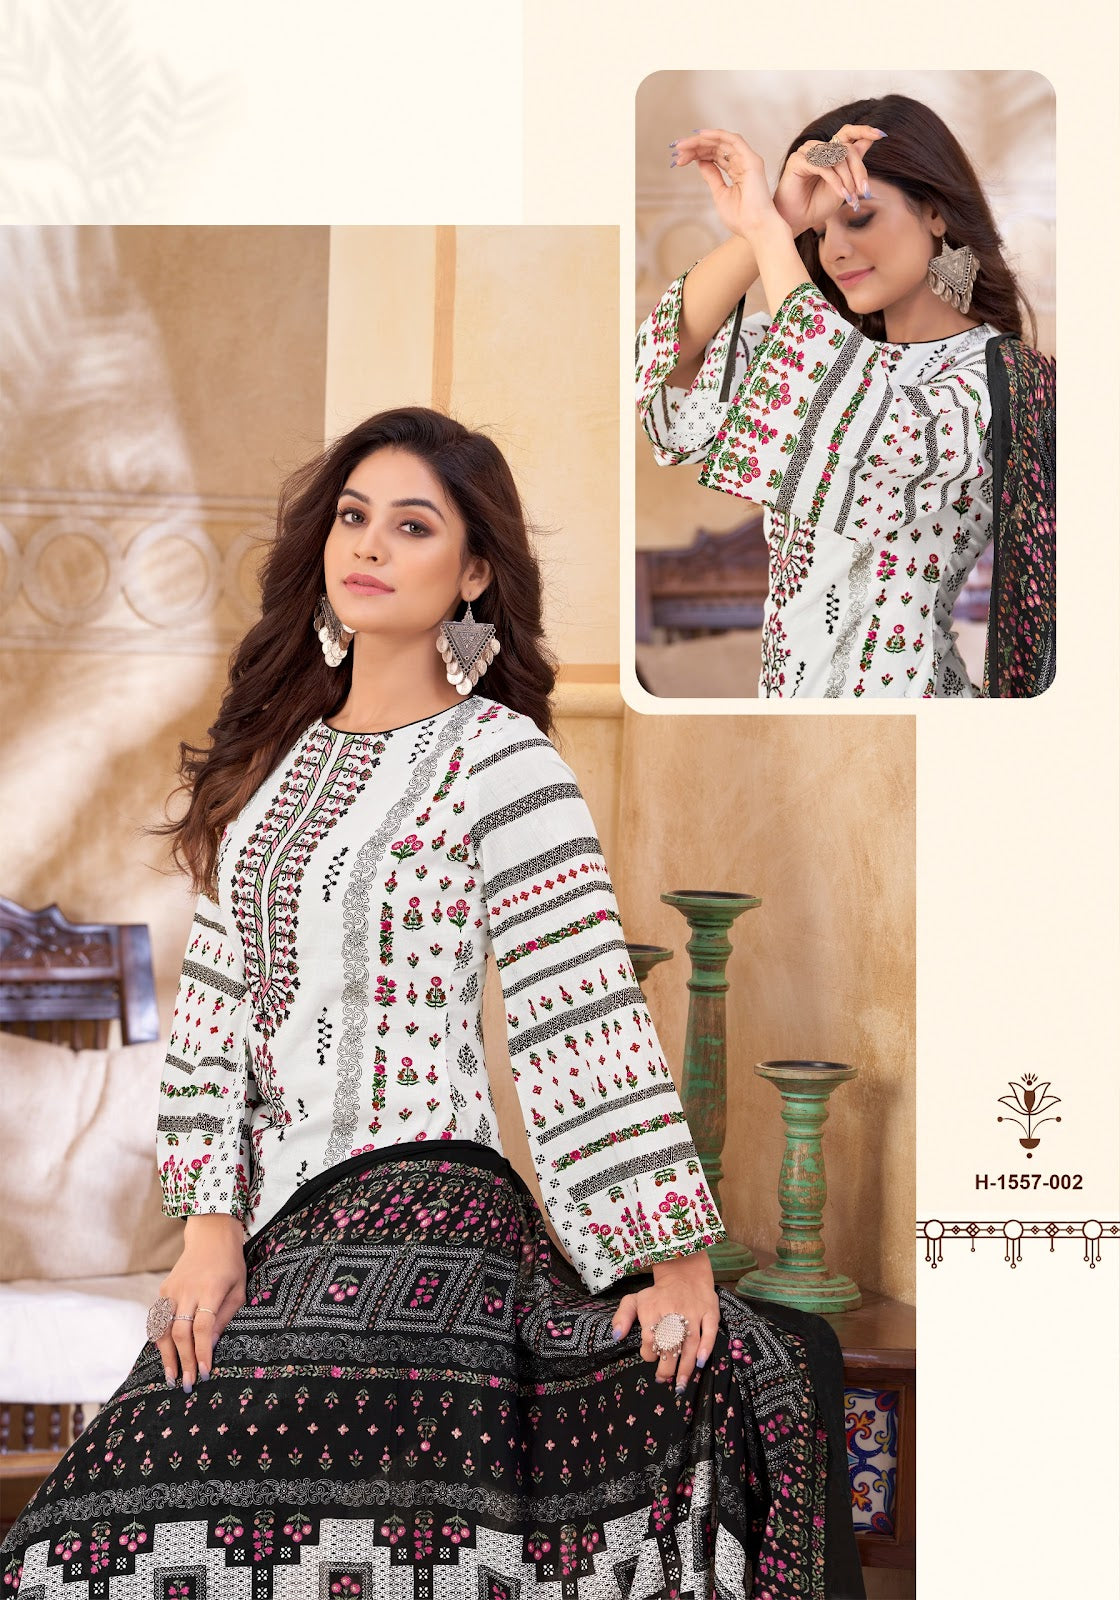 Qudrat Black-White Alok Cambric Cotton Karachi Salwar Suits Manufacturer India